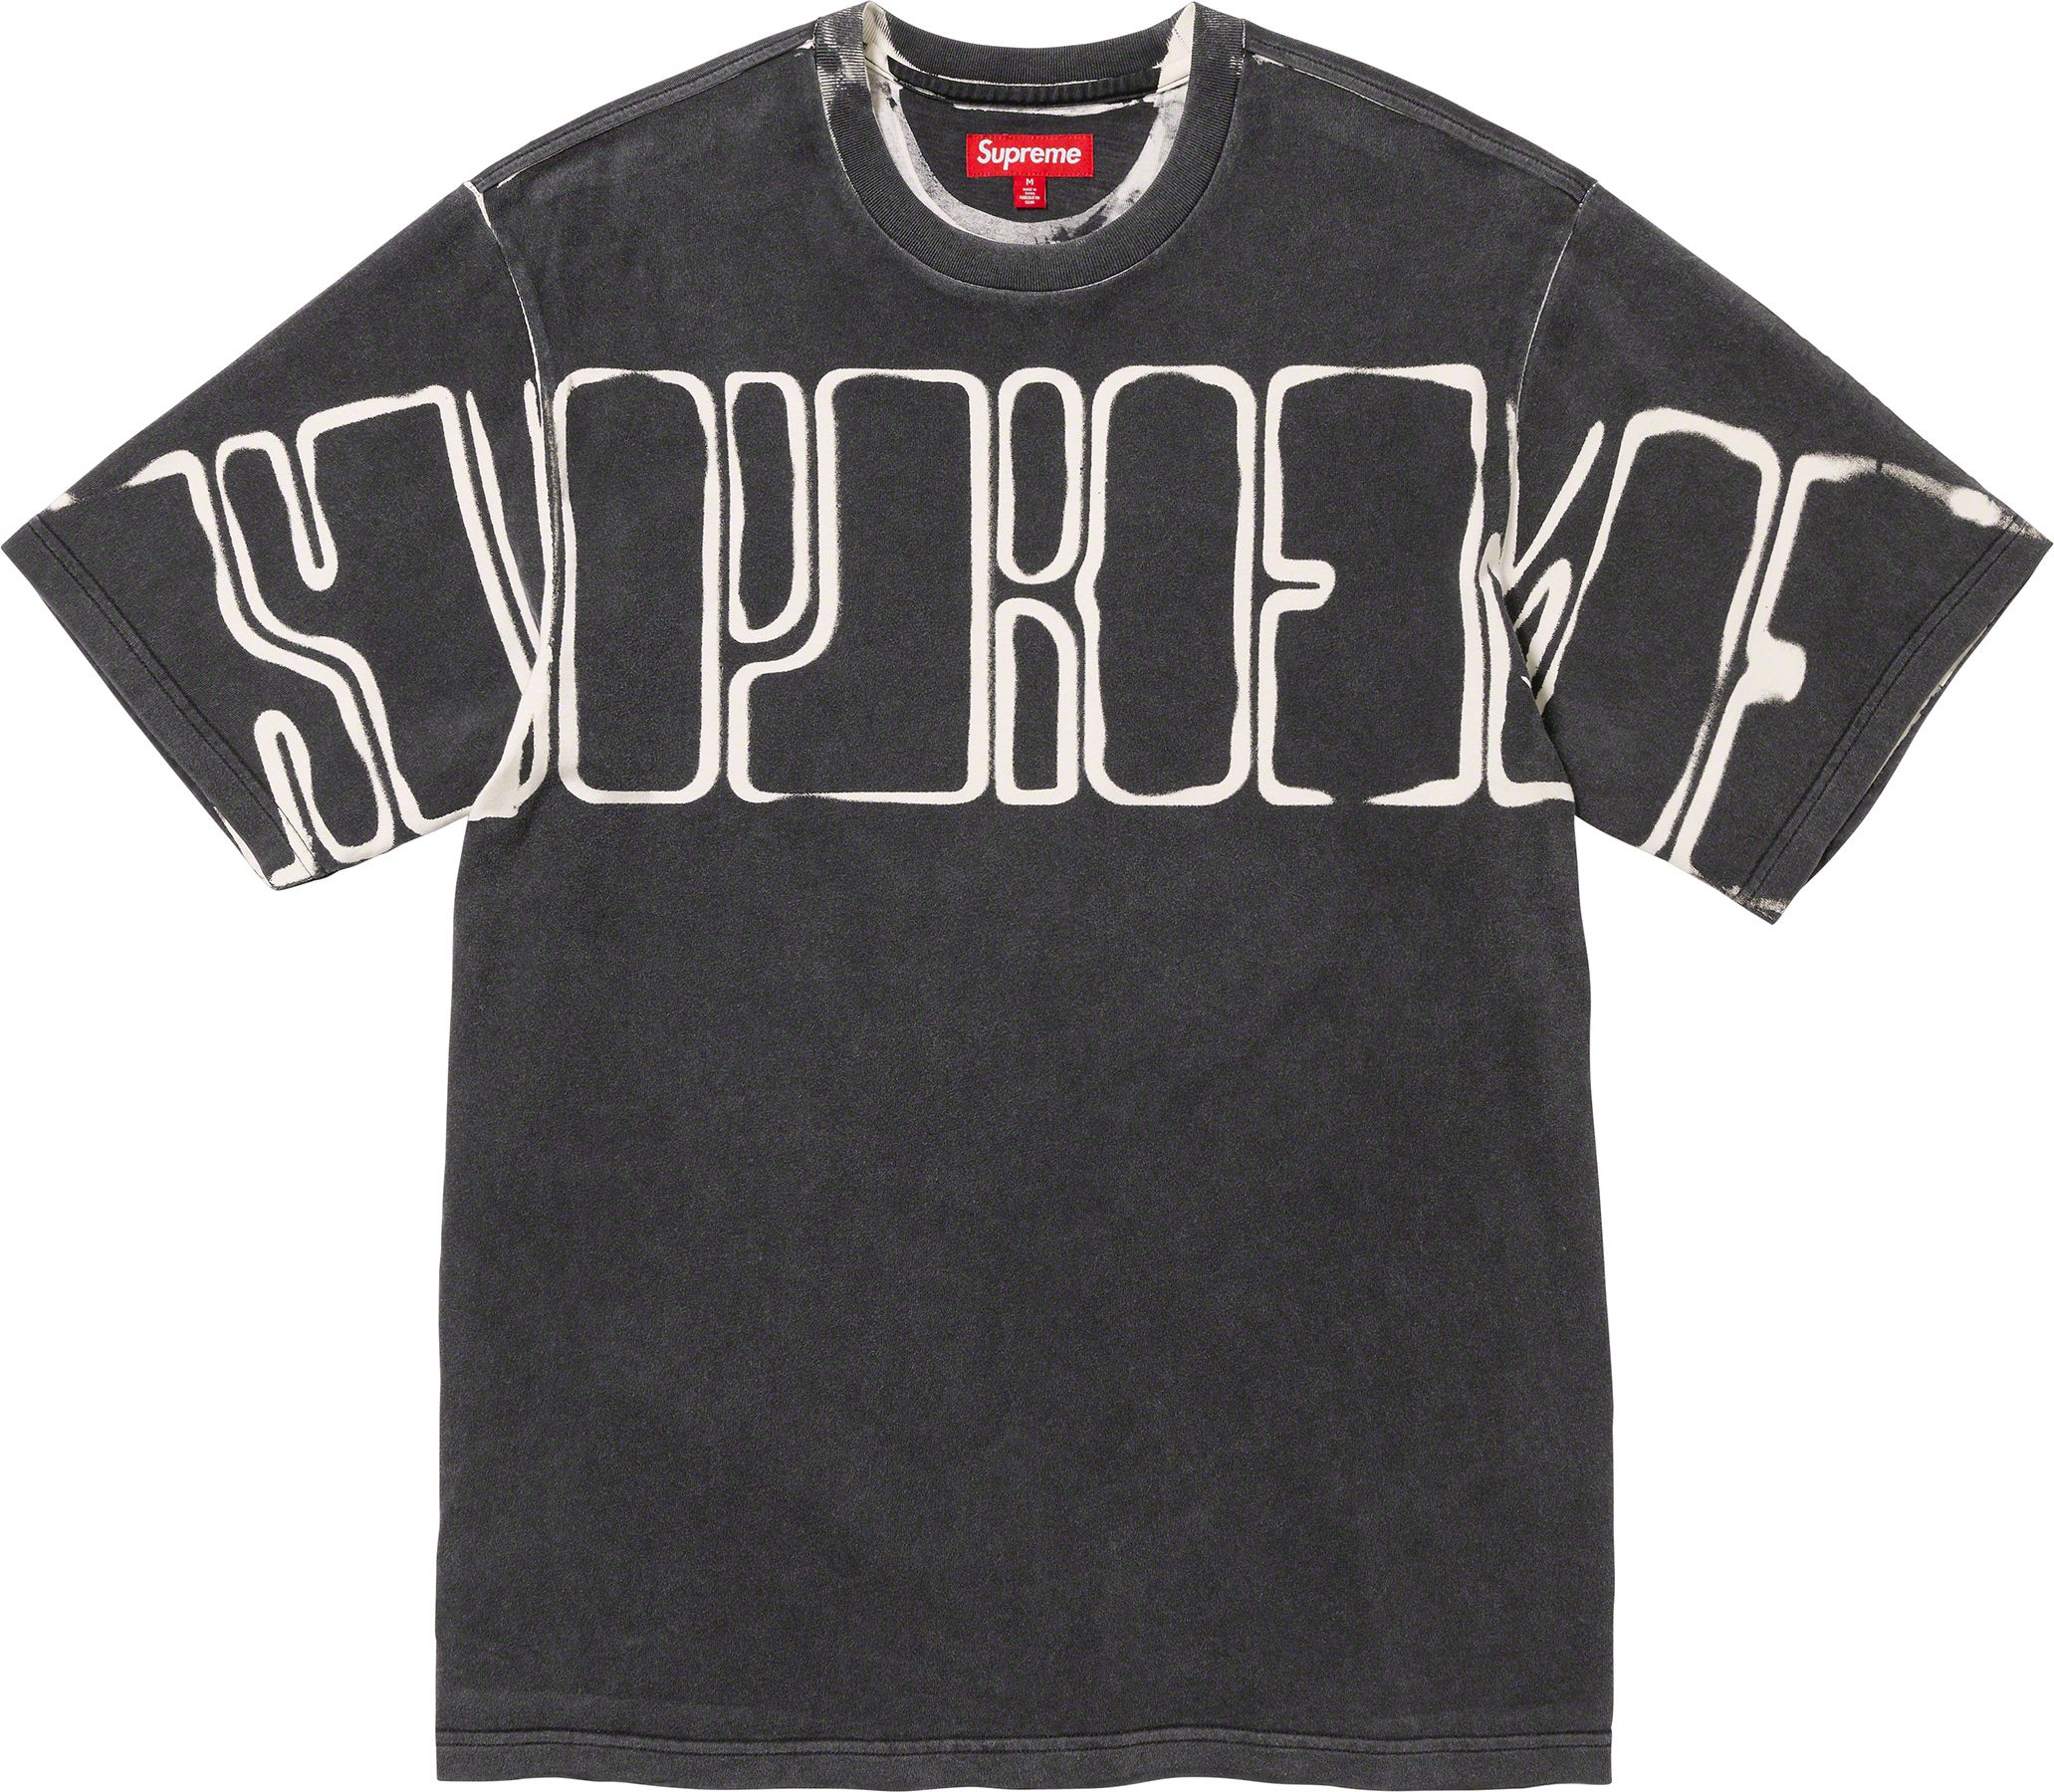 Supreme Overprint Knockout S/S Top Slate